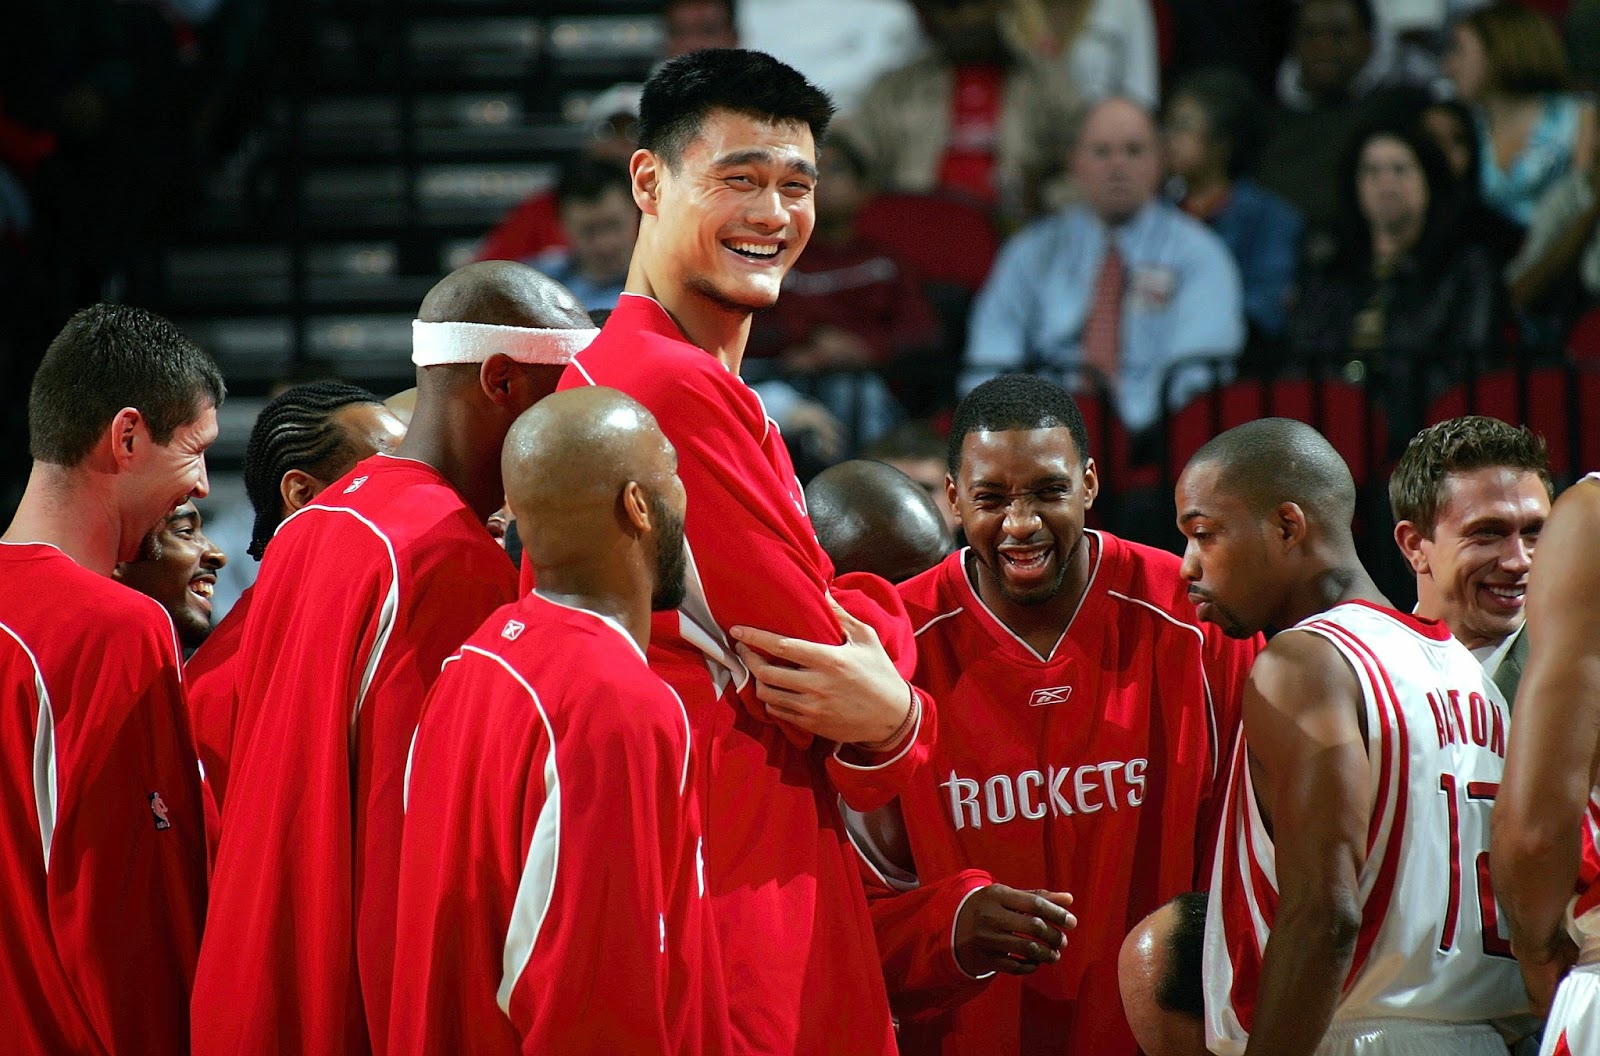 Ladang Keju Kumpulan Foto Yao Ming Raksasa Legenda Dari Dunia Basket